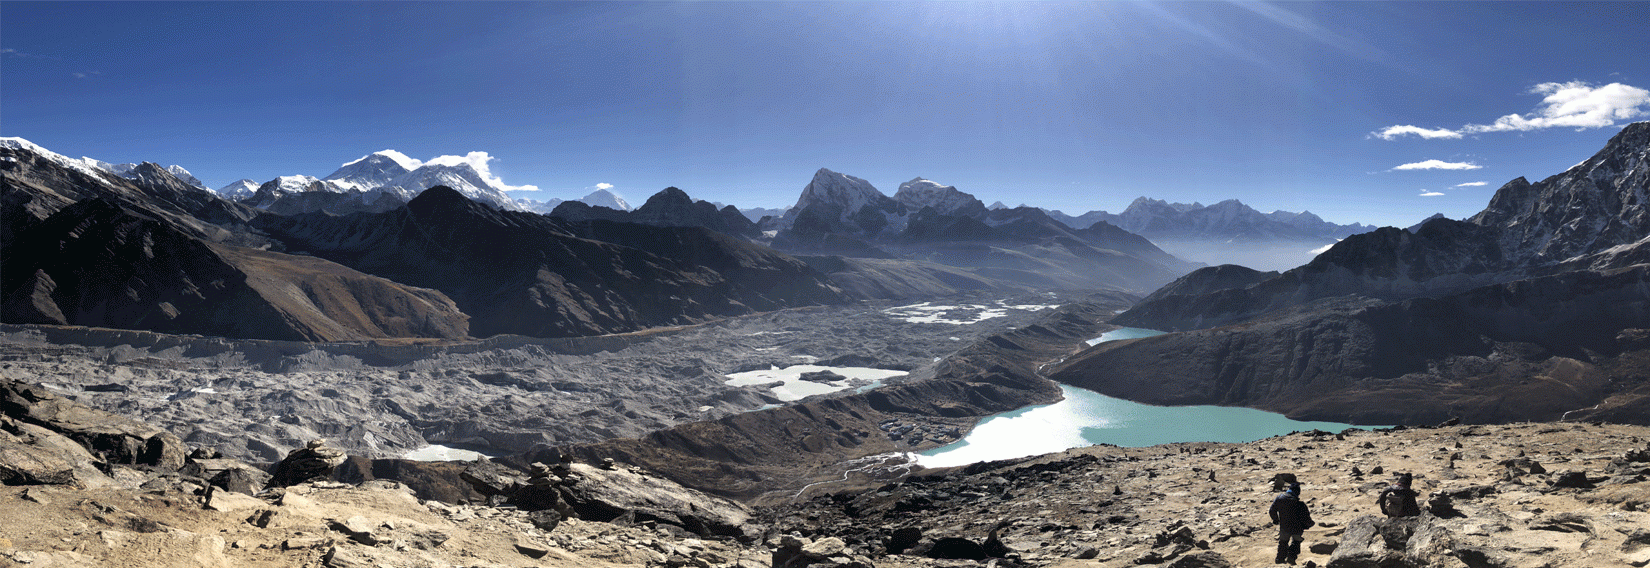 Mt. Everest Region Trek